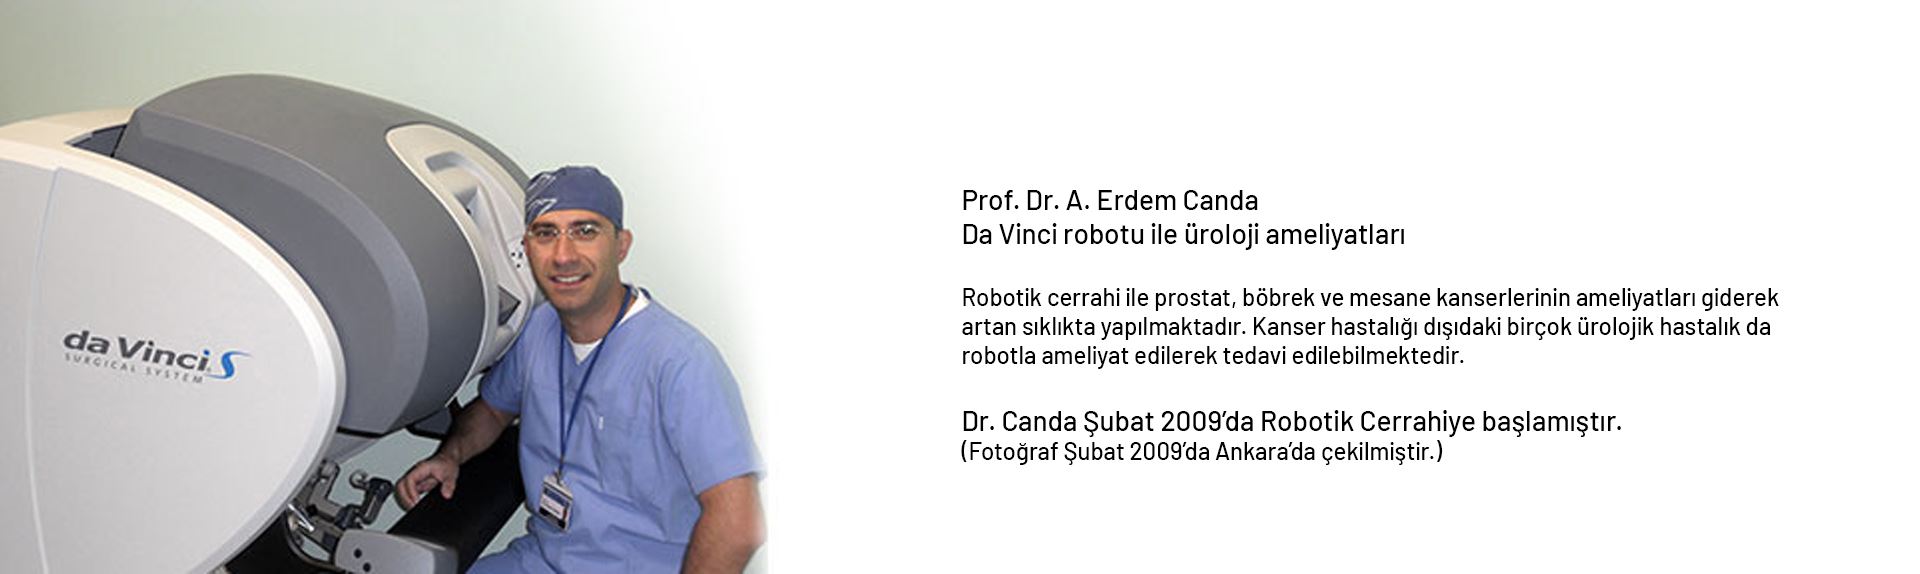 Prof. Dr. A. Erdem Canda Da Vinci Robotu Ameliyatı